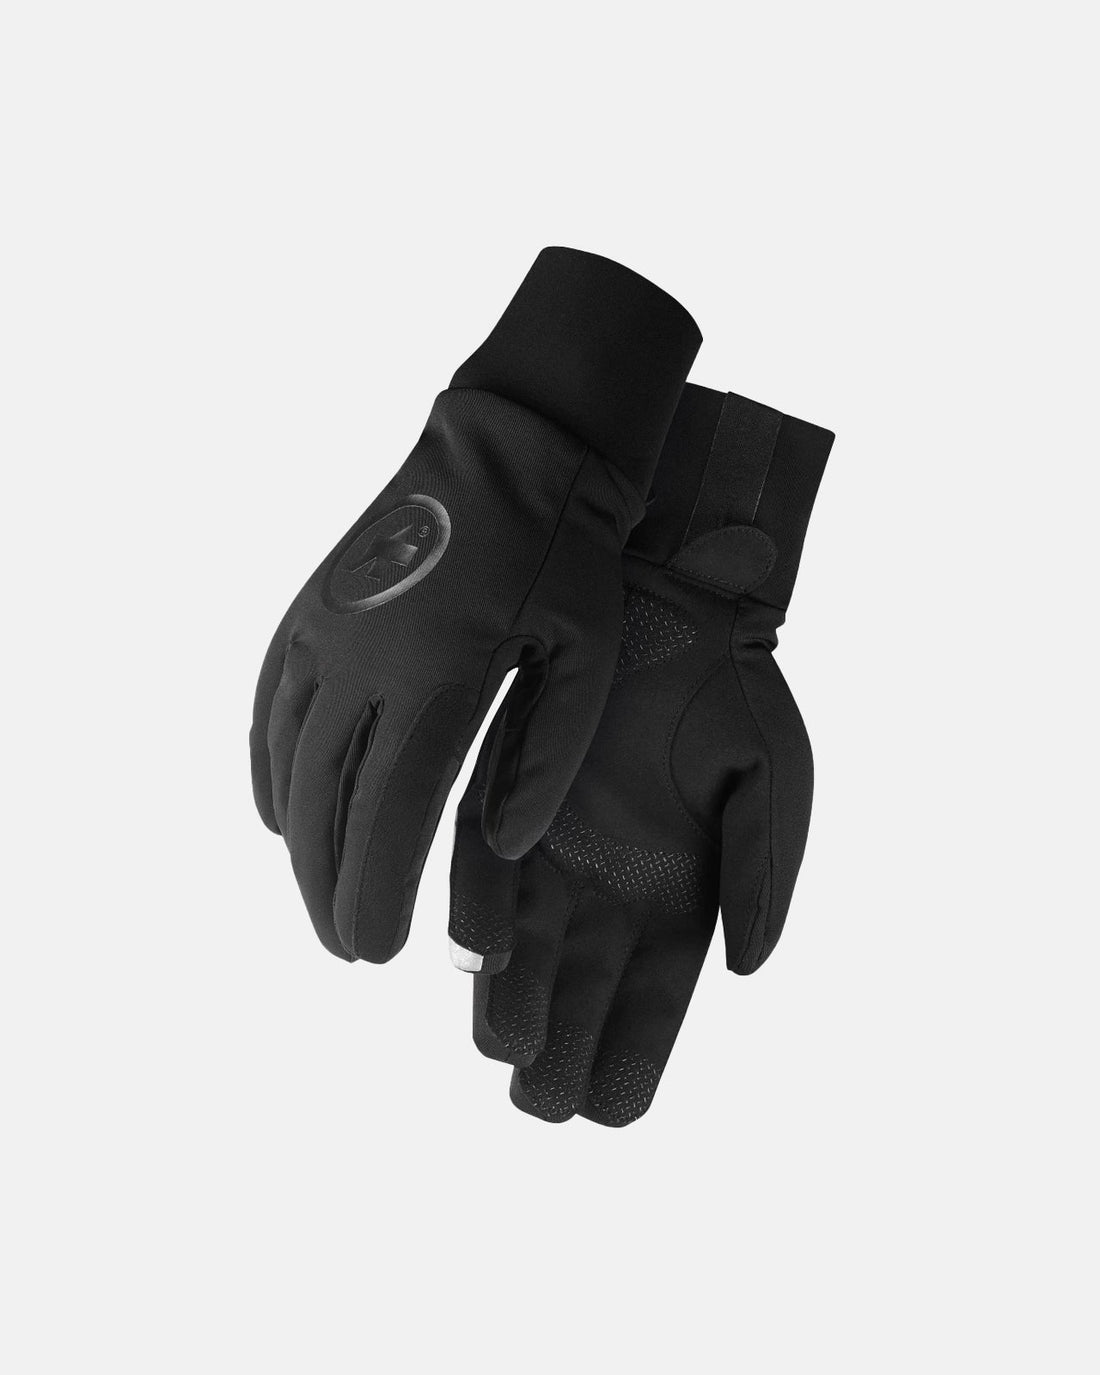 Ultraz Winter Gloves - Black - Assos